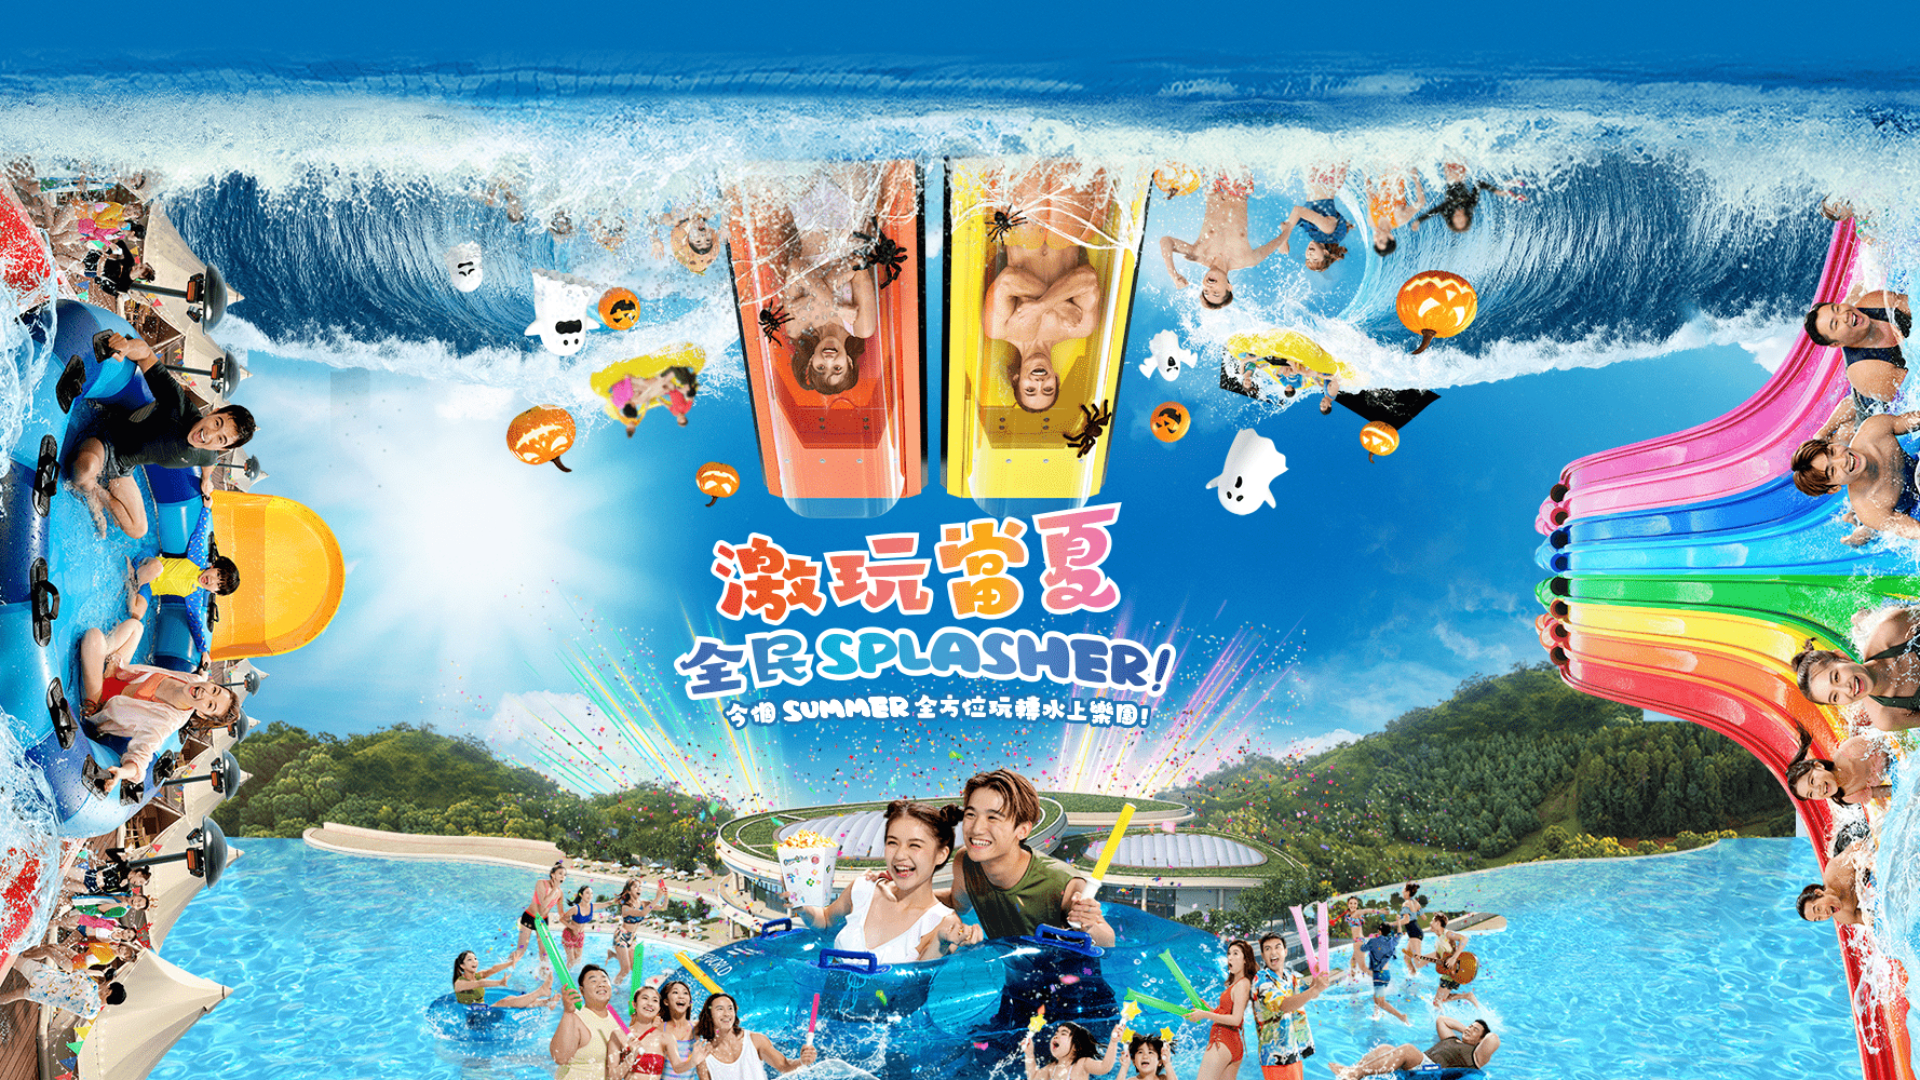 Mermaid Water Carnival at Water World Ocean Park